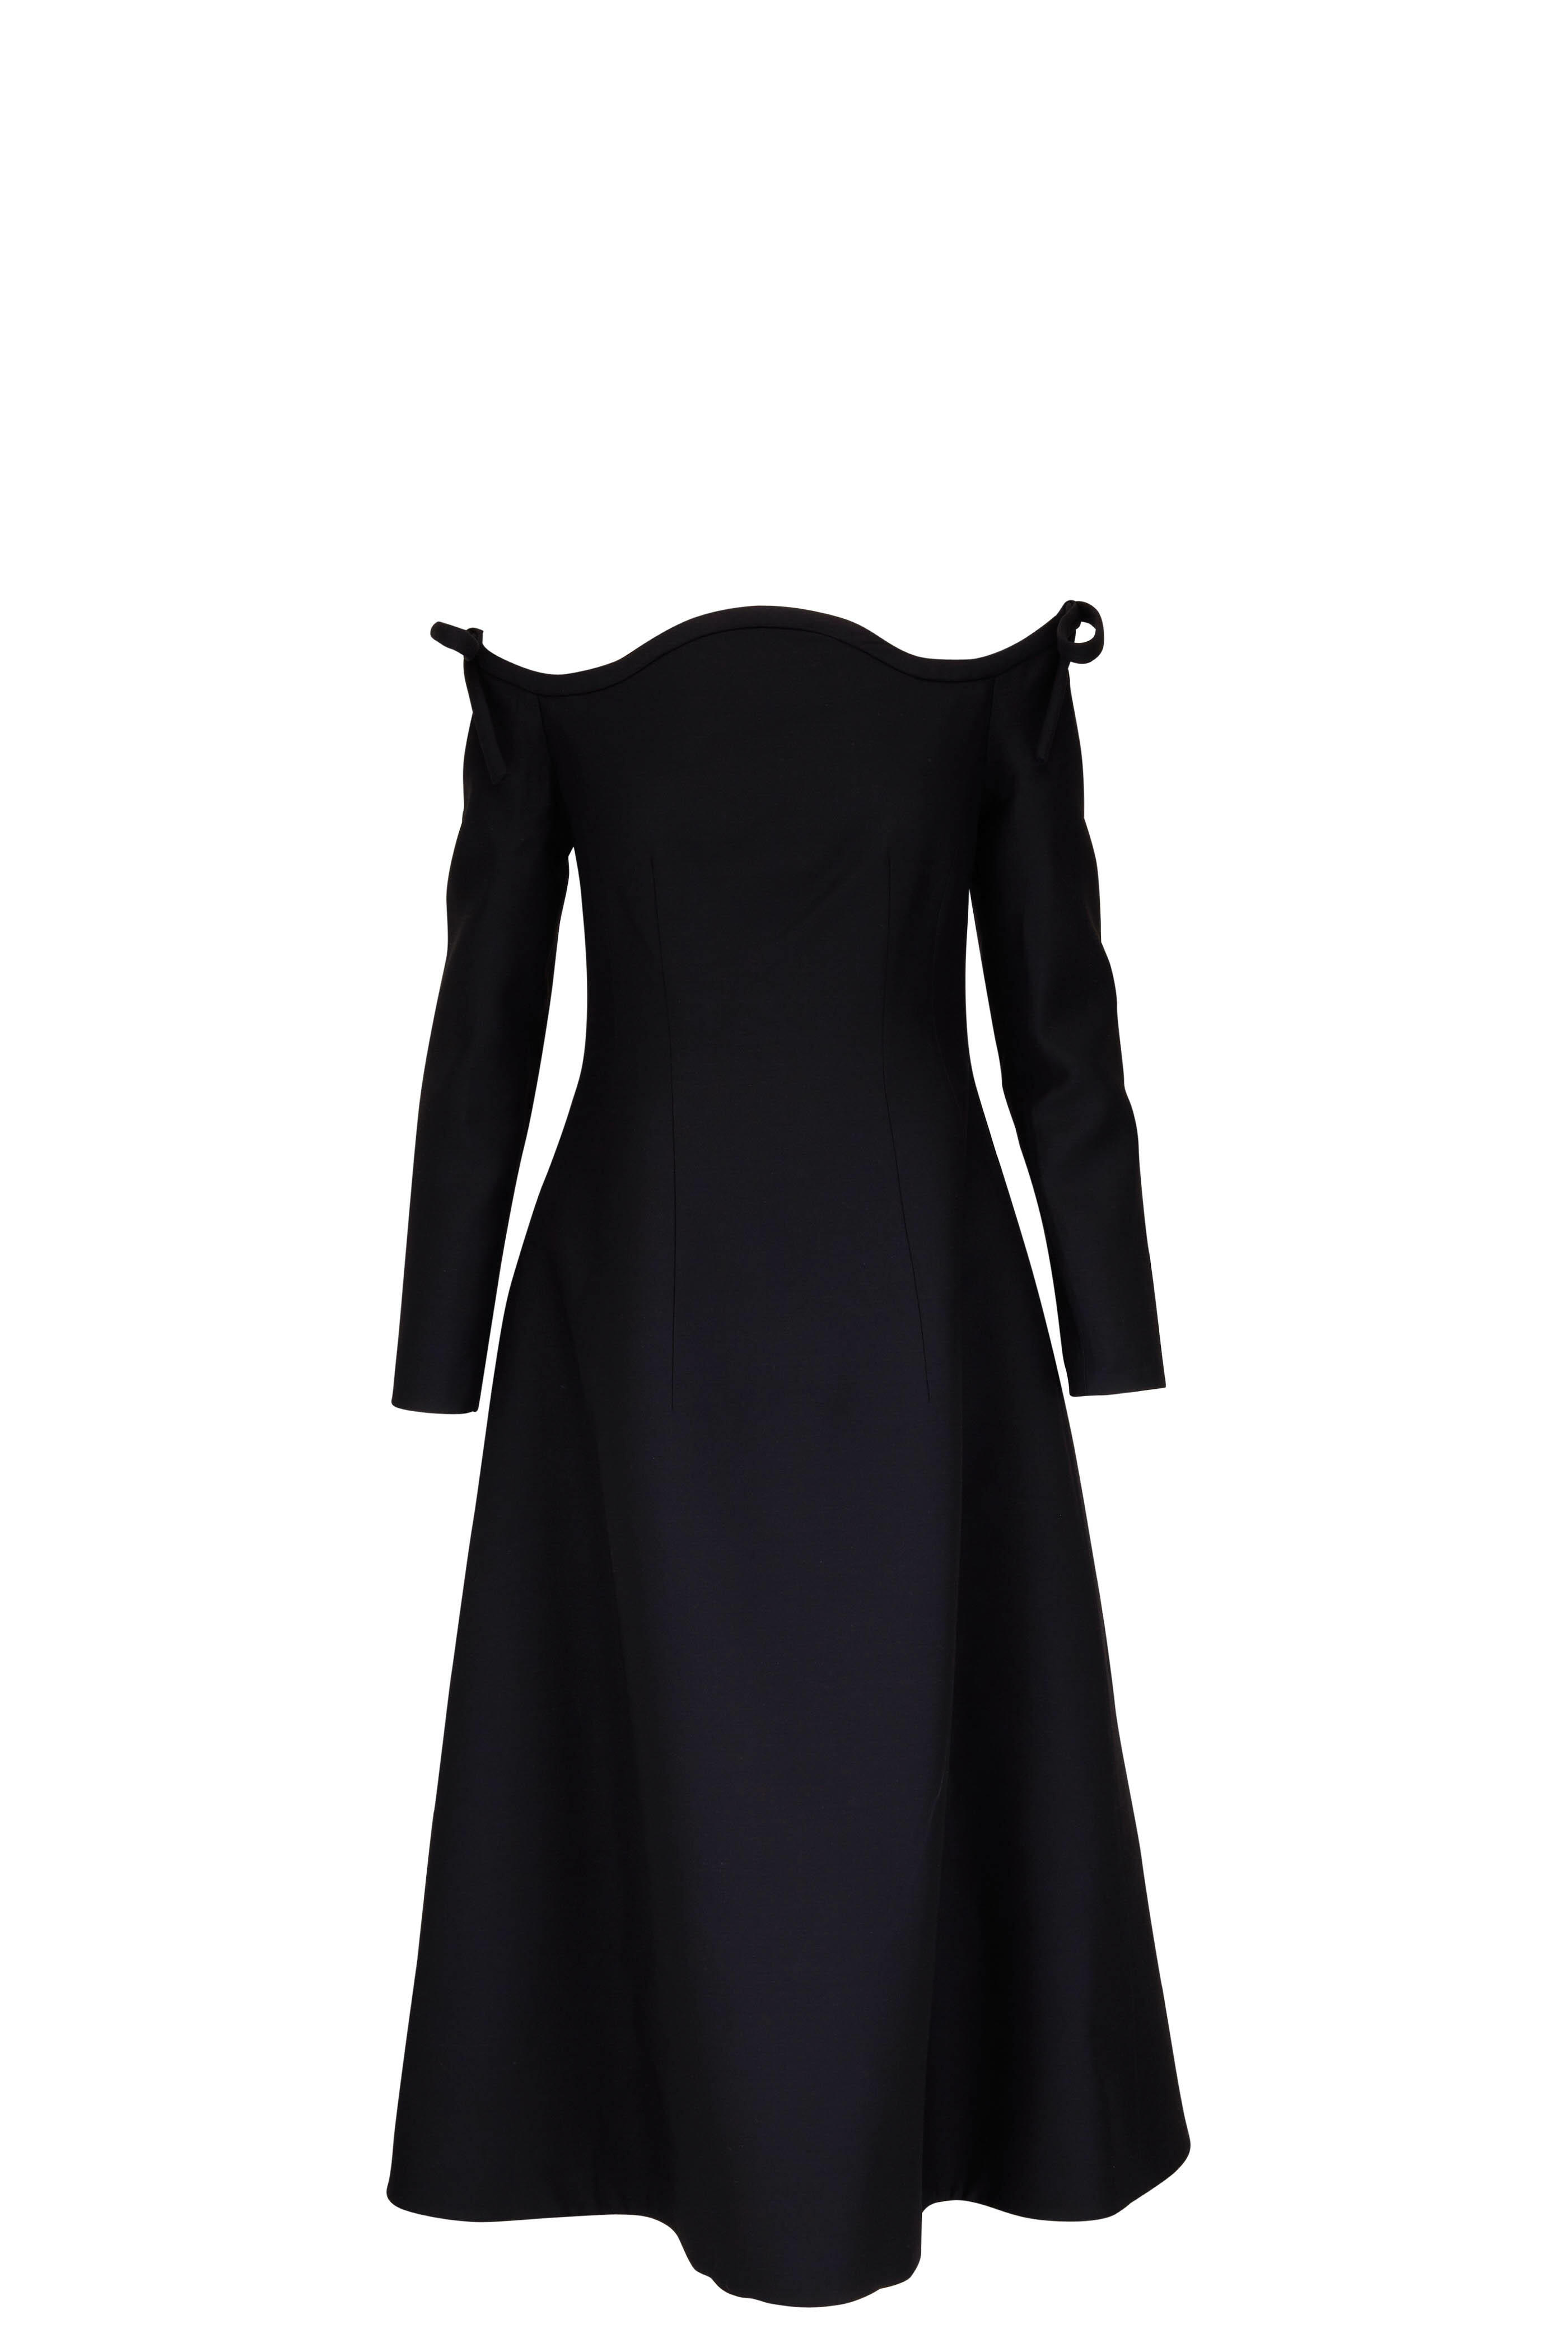 Valentino - Black Crepe Couture Midi Dress | Mitchell Stores